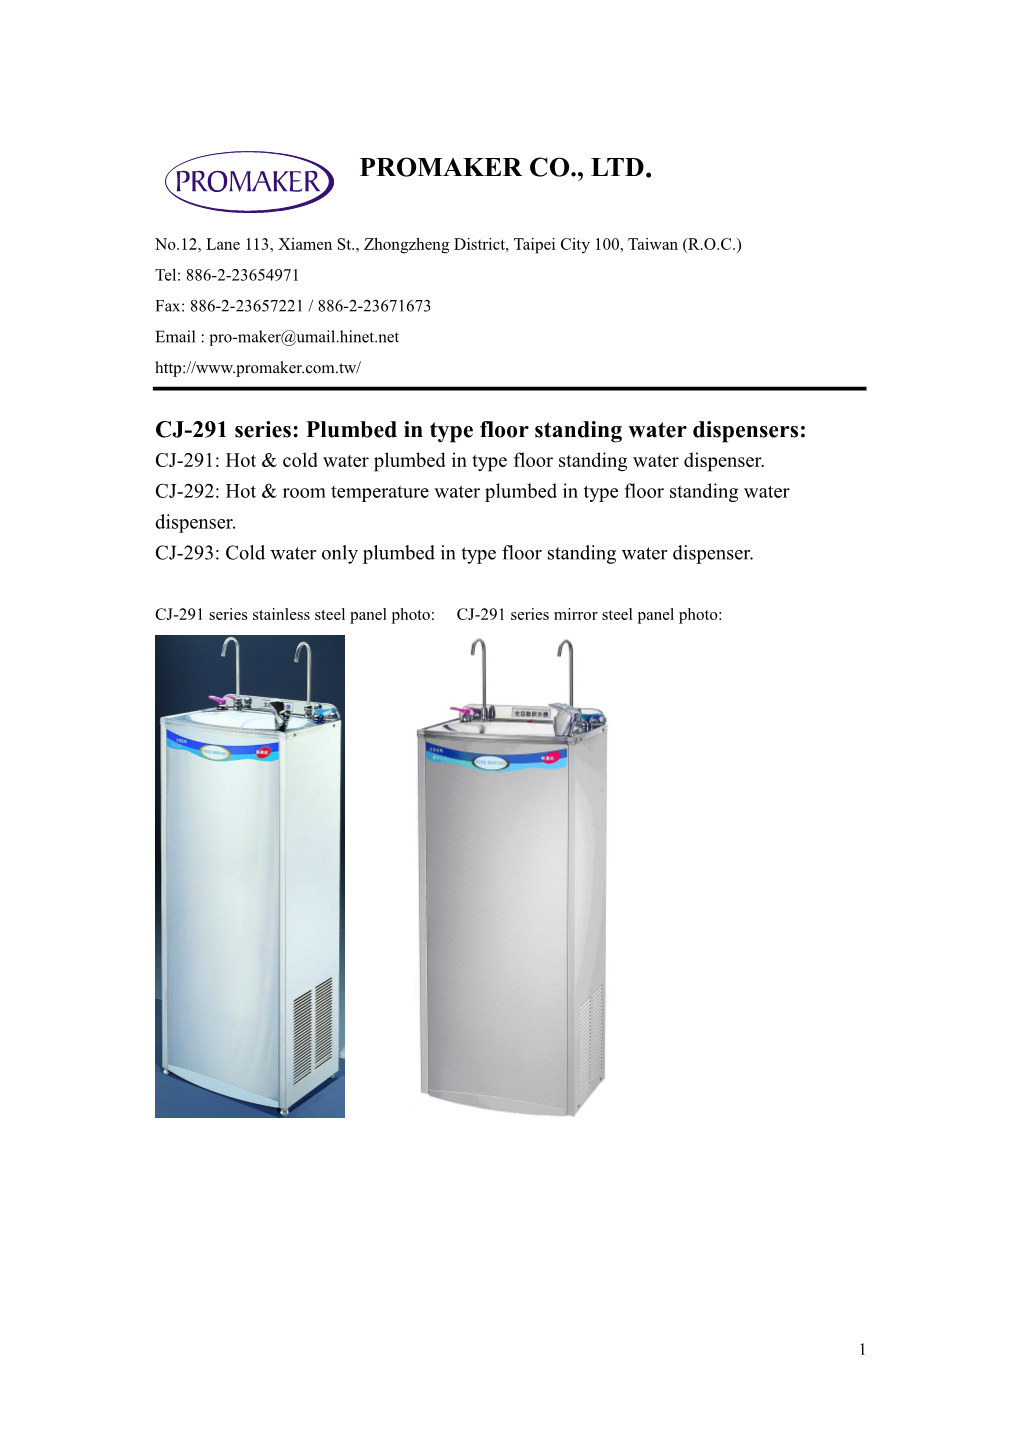 CJ-291 Series: Plumbed in Type Floor Standing Water Dispensers